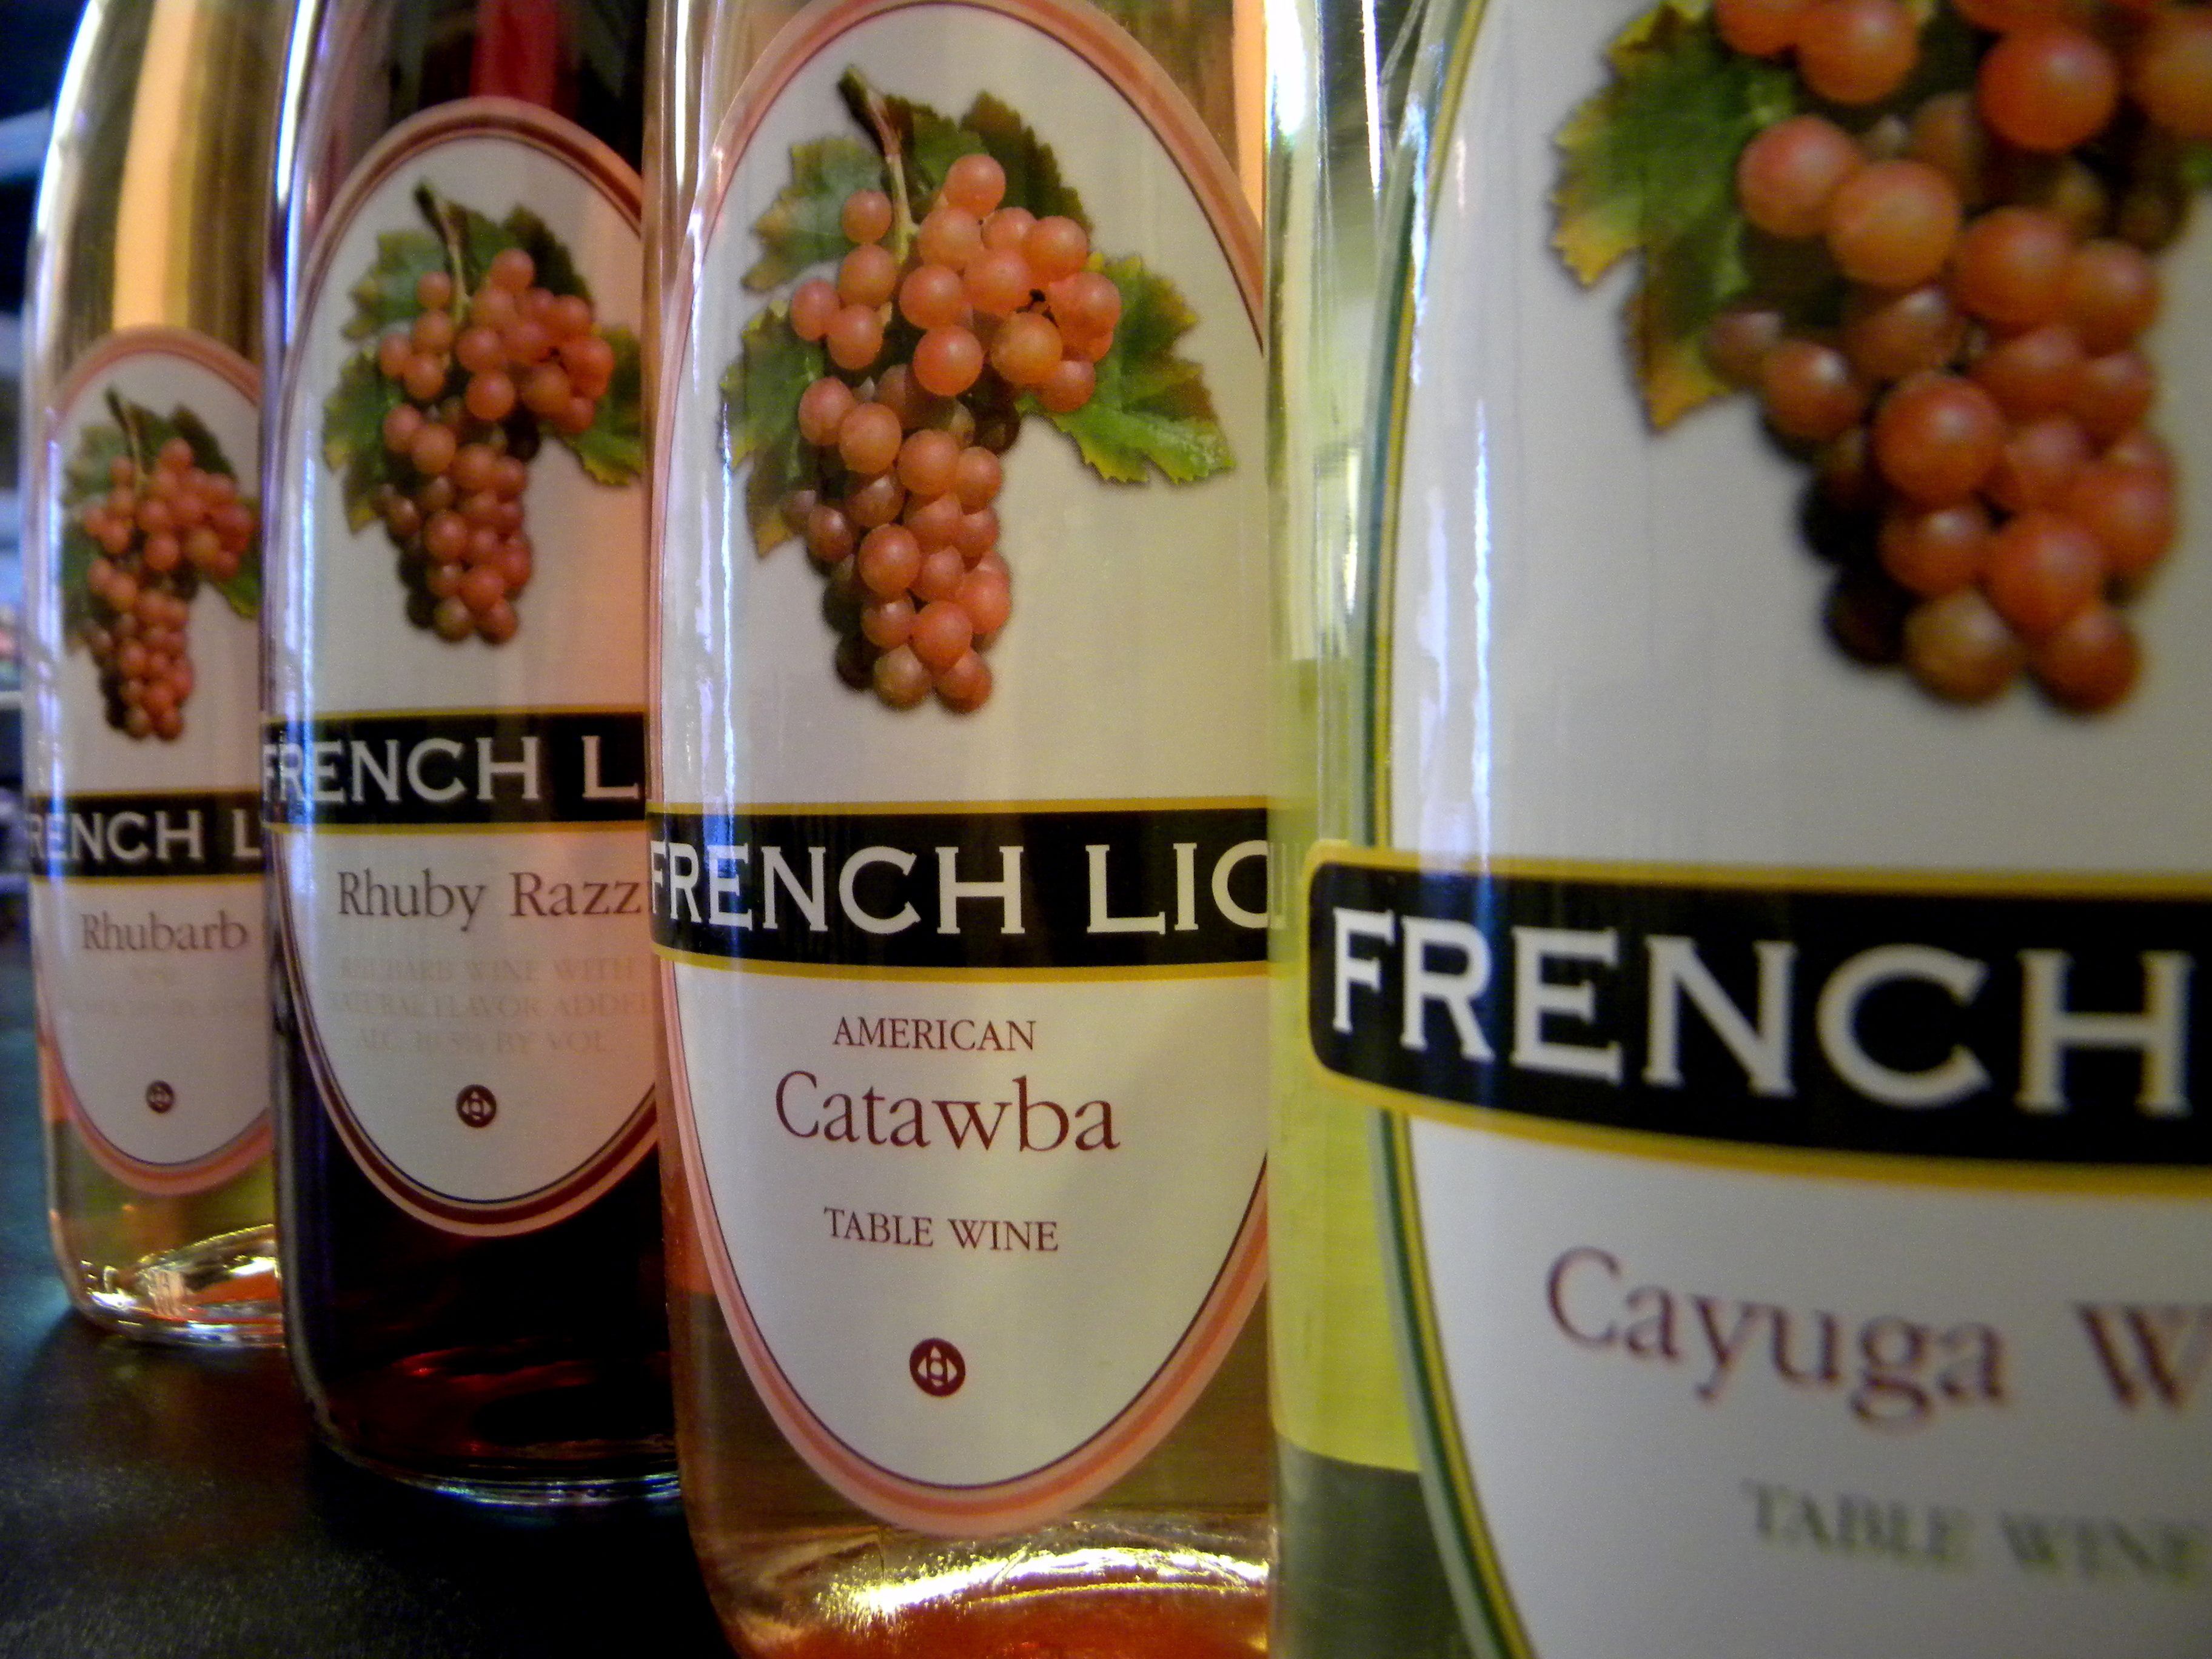 Catawba french lick wine